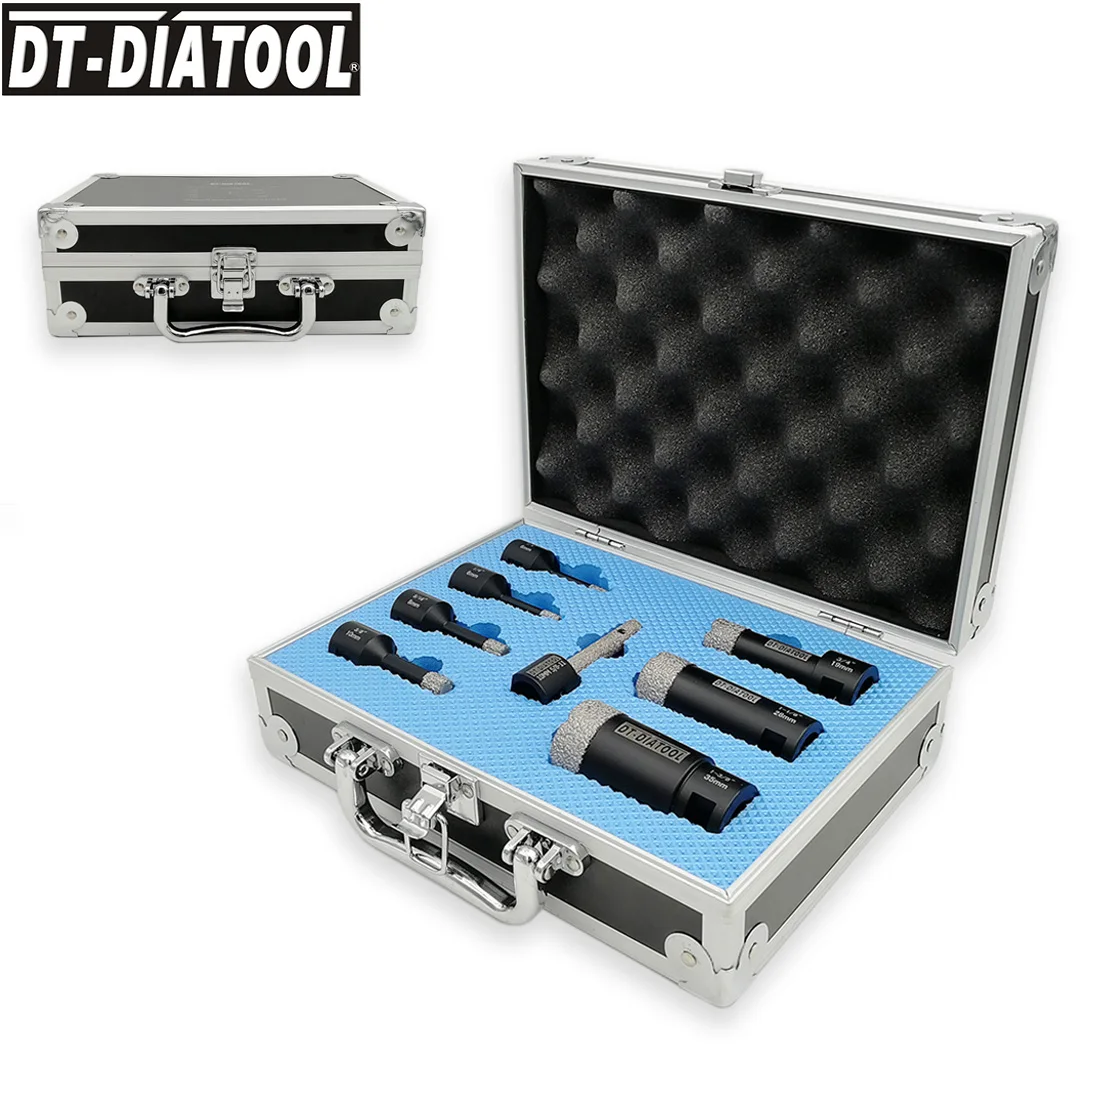 DT-DIATOOL 8pcs/Set Vacuum Brazed Diamond Drill Core Bits 5/8-11 Set Mixed Size Hole Saw & Finger Bit For Porcelain Tile Marble